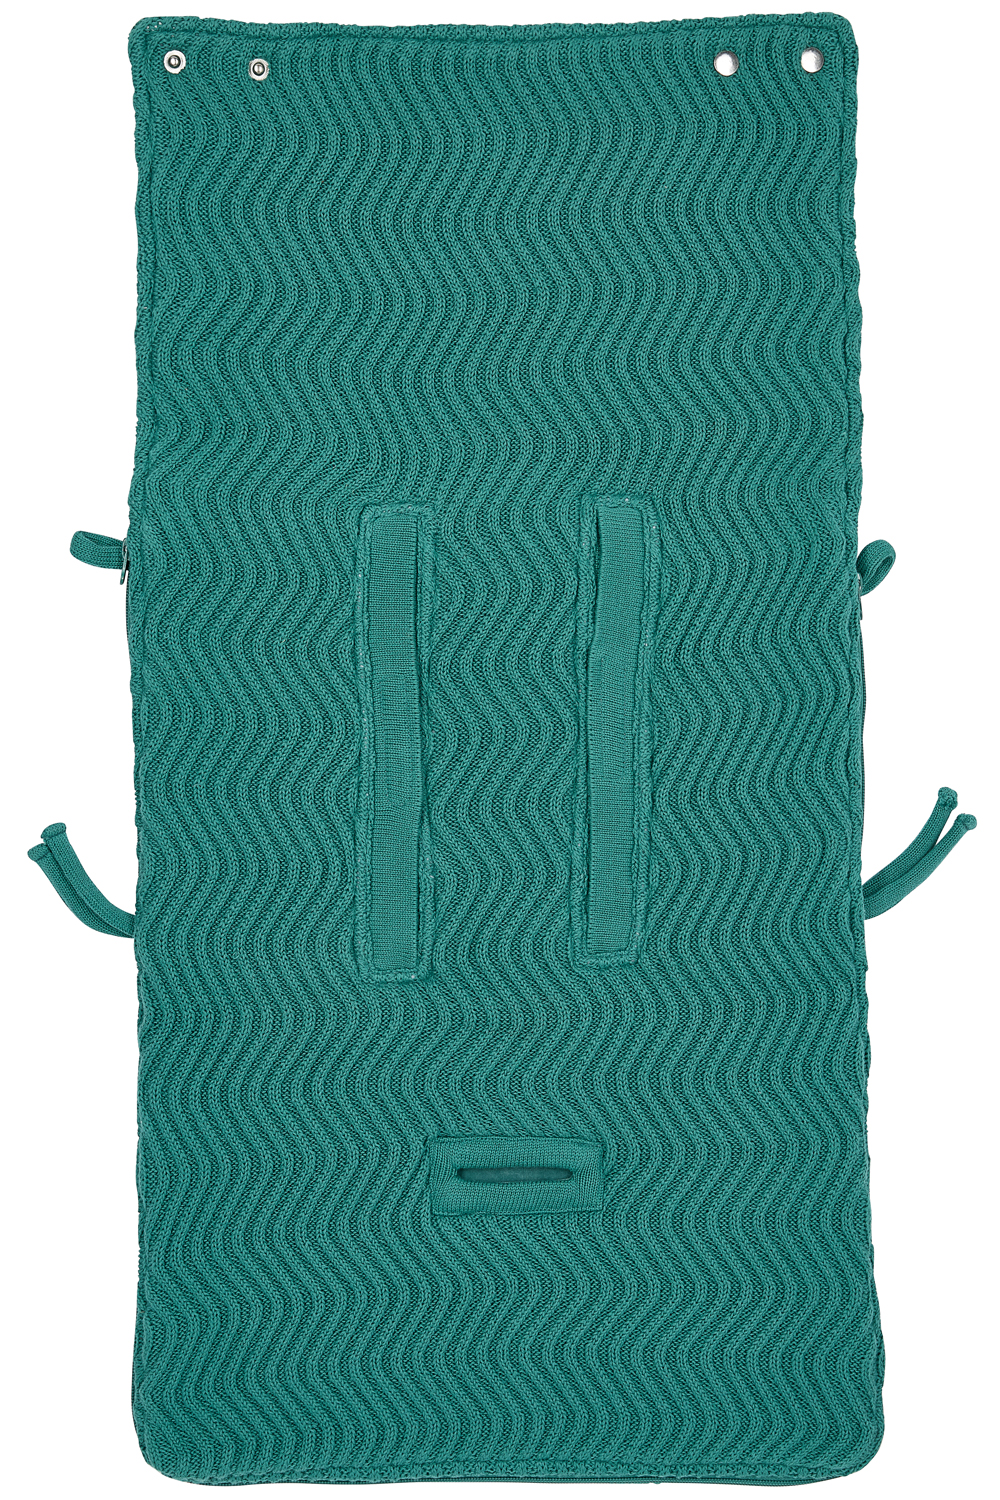 Footmuff Waves - emerald green - 40x82cm